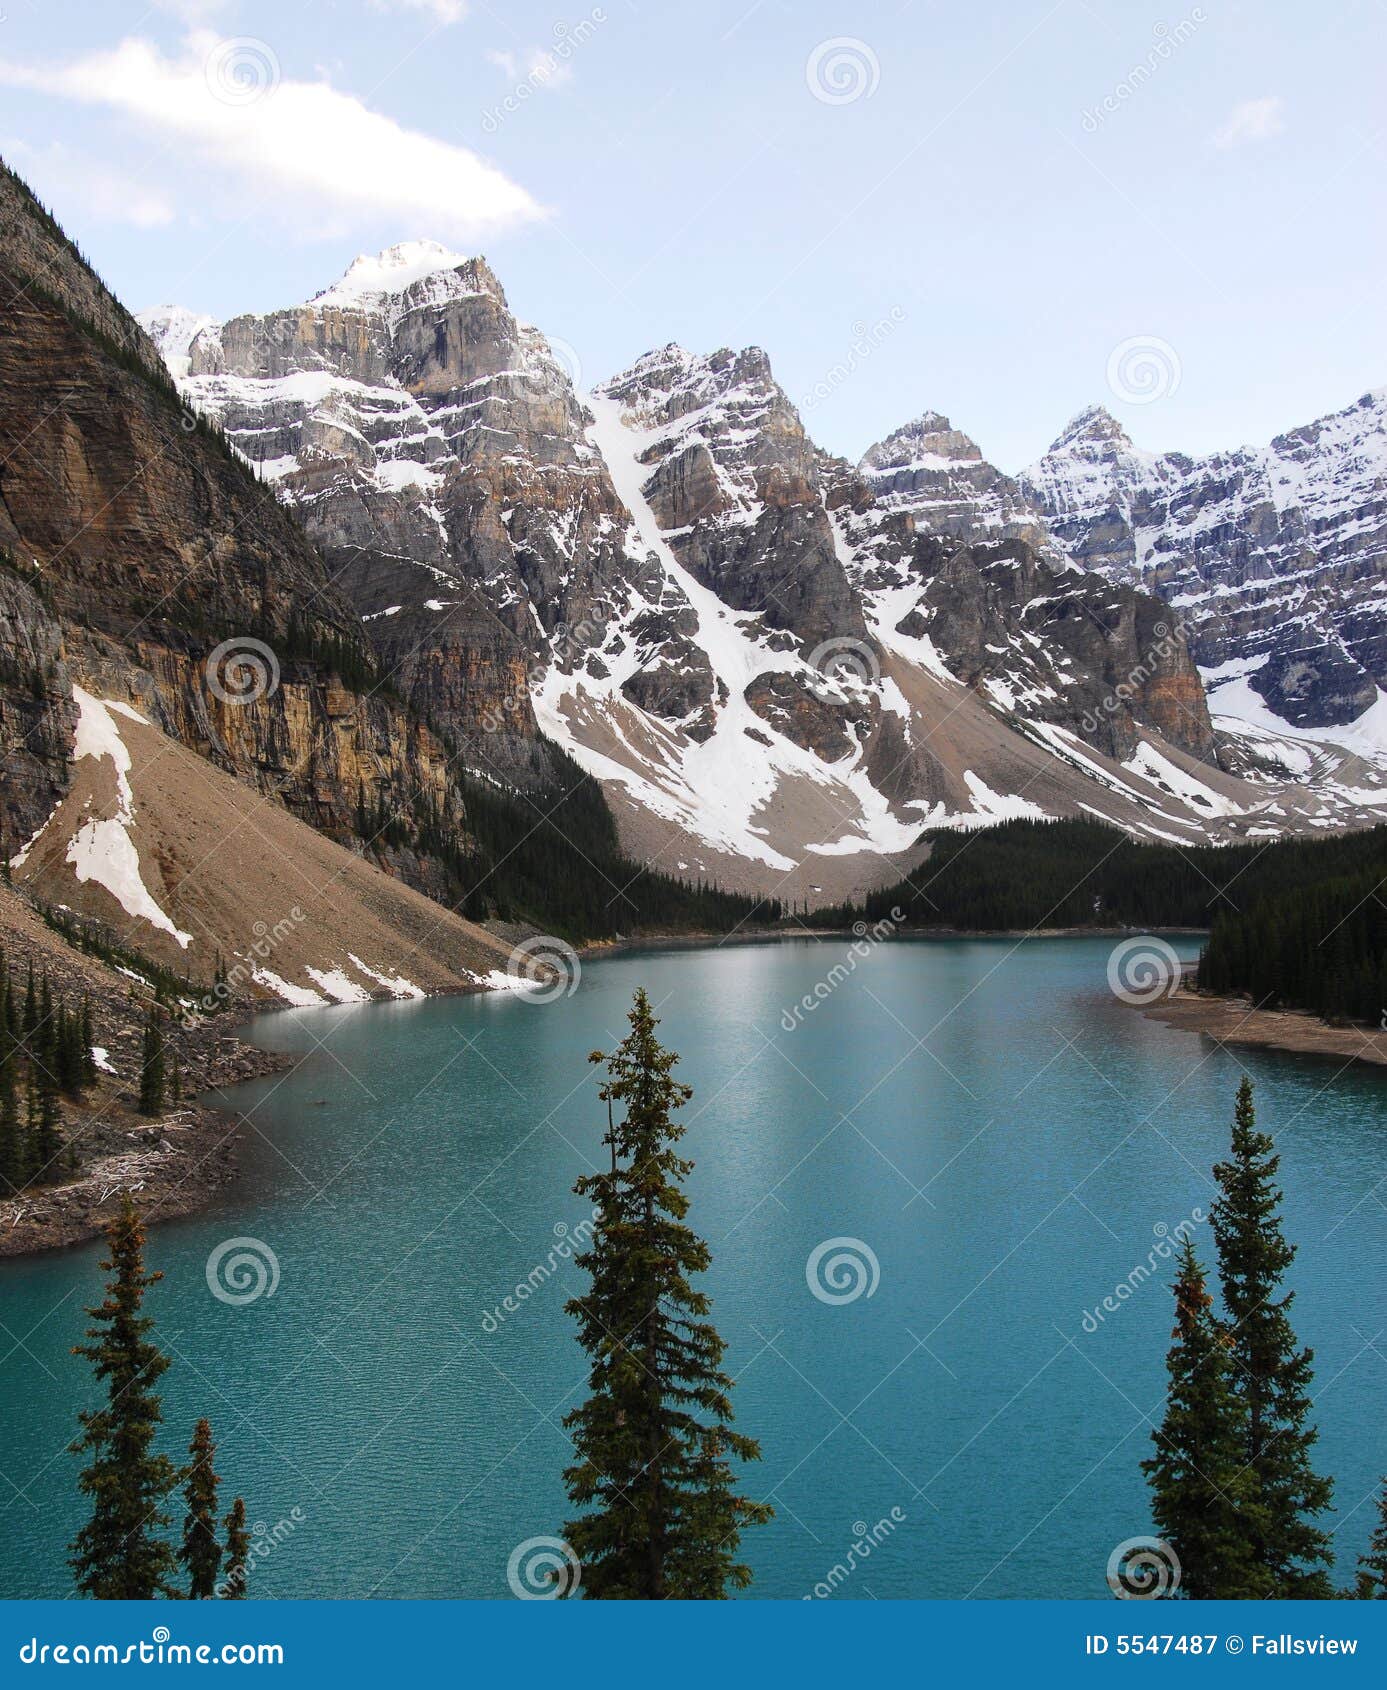 moraine lake and mountain peaks